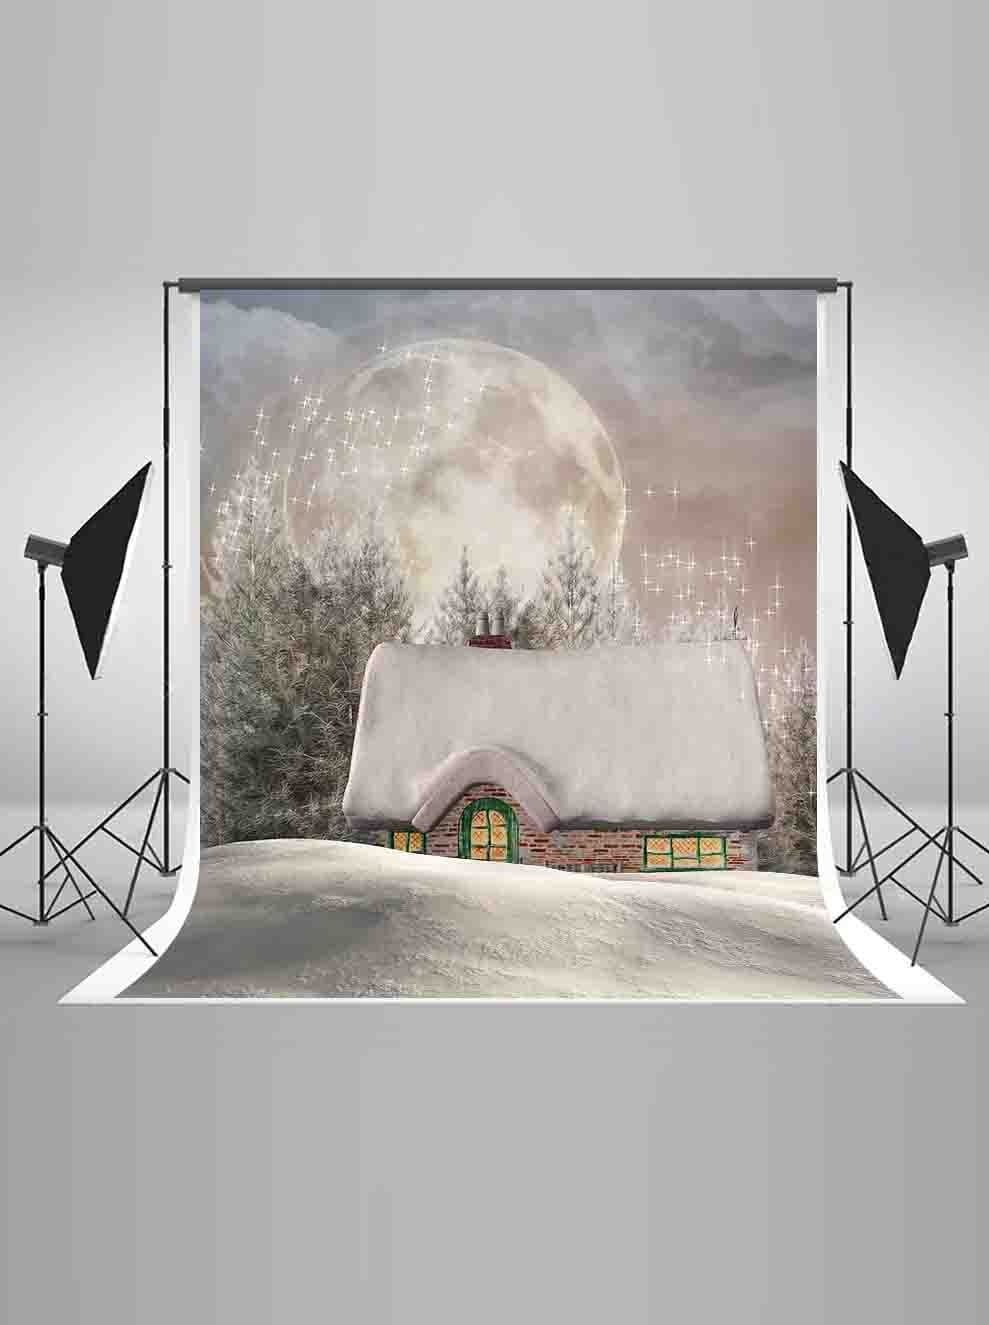 Fairy Tale Christmas Moon House Covered By Snow IBD-246825